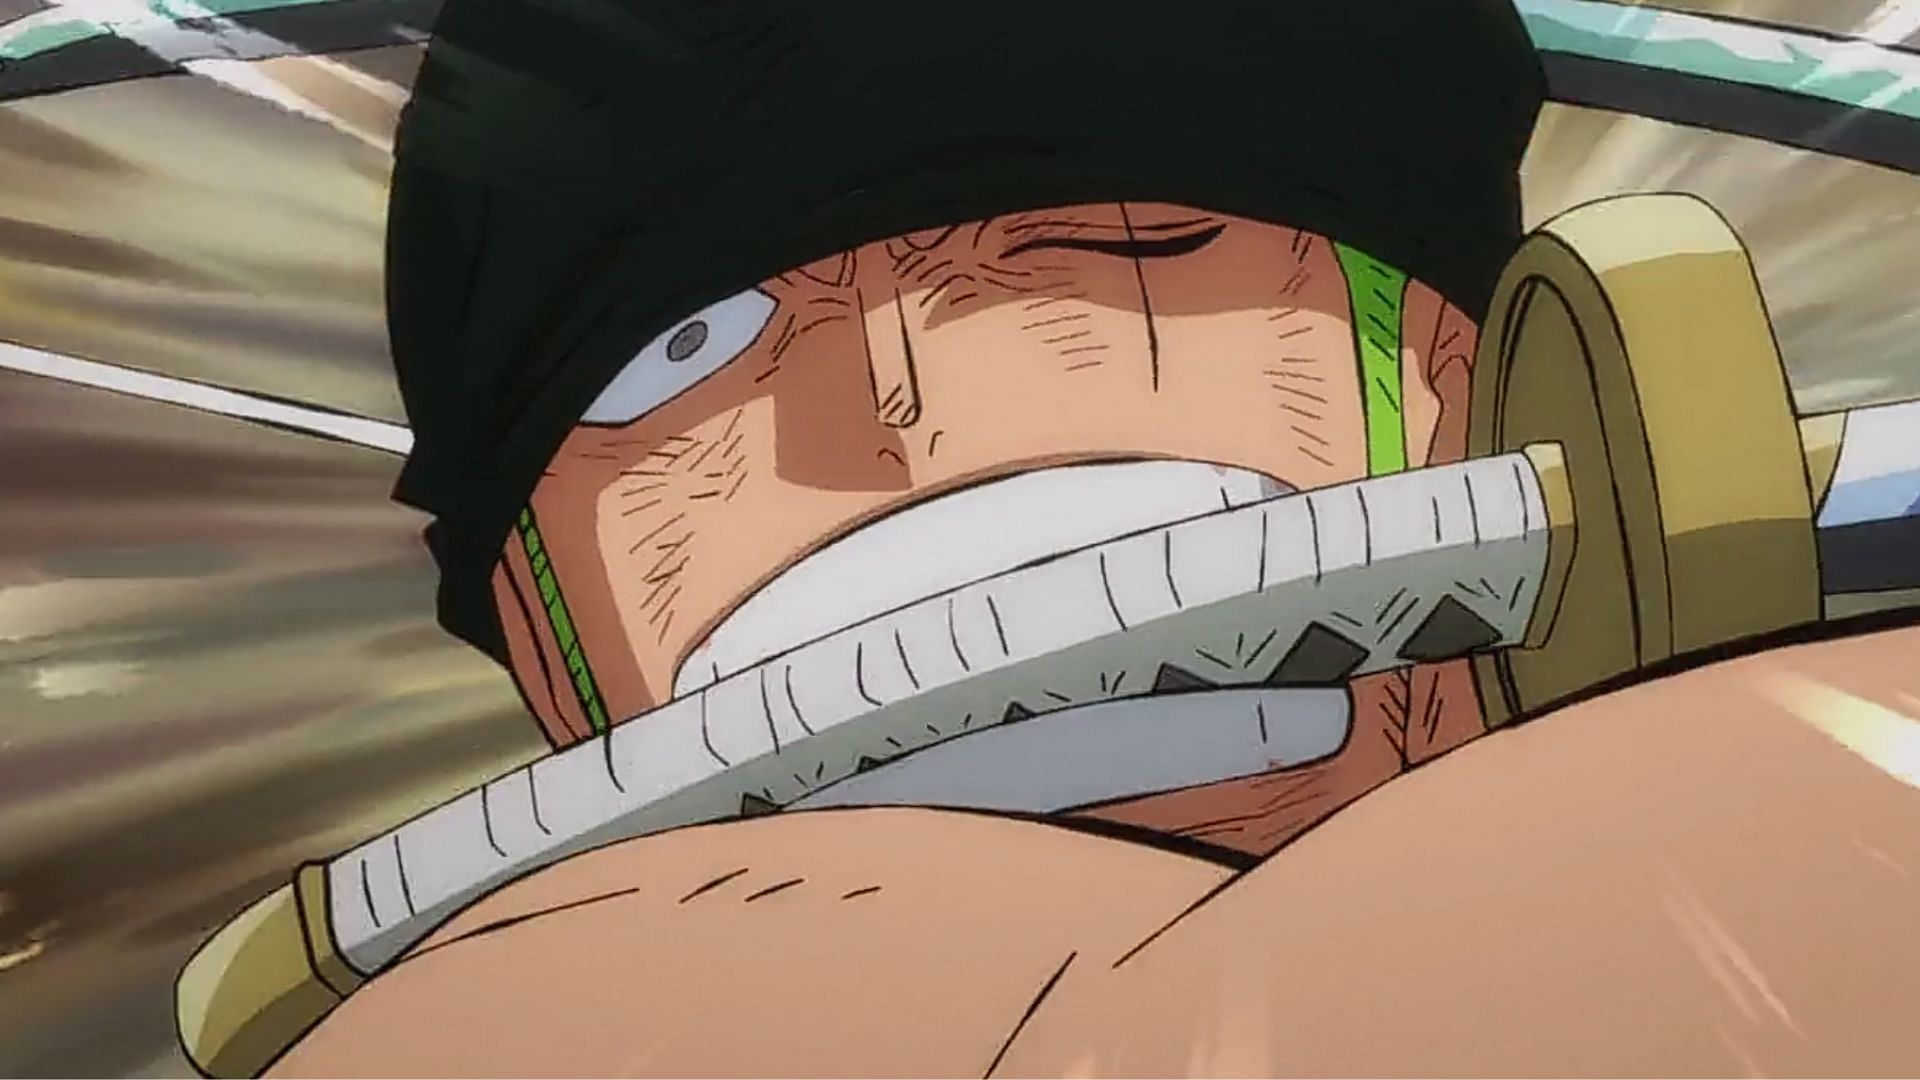 Zoro in One Piece episode 1047 (Image via Toei Animation)